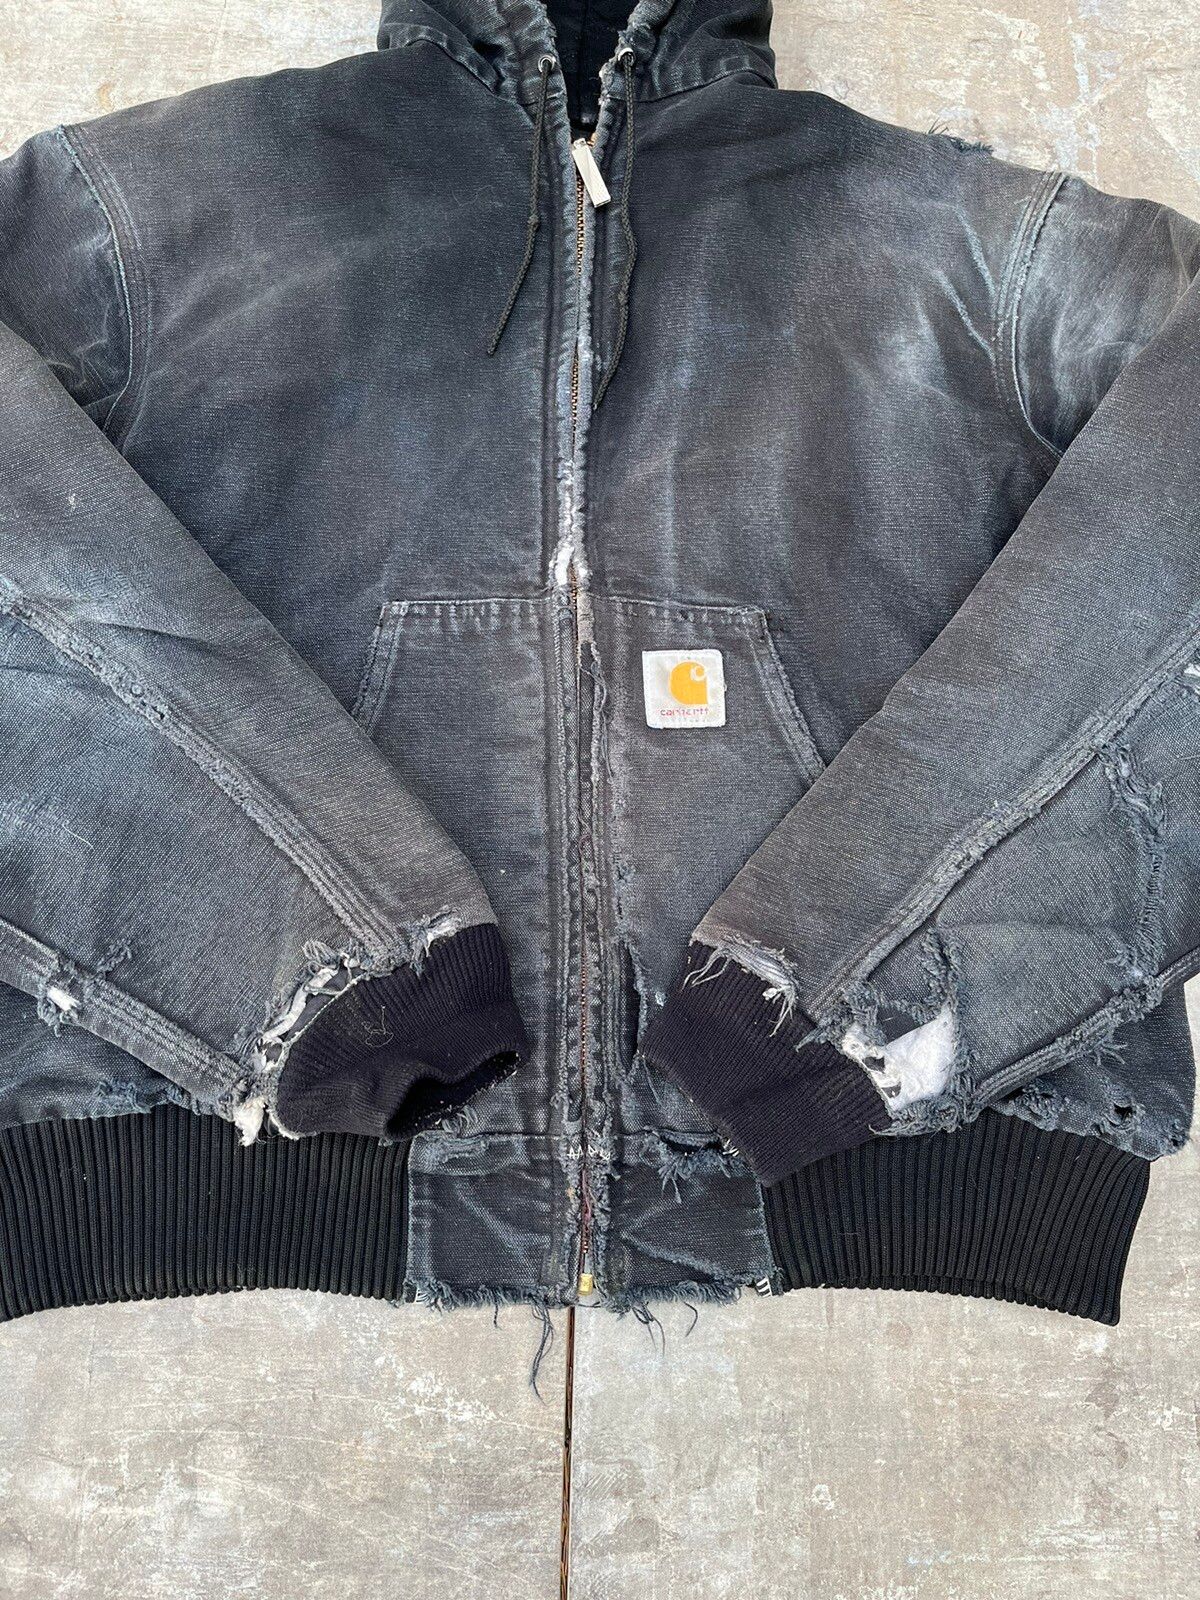 Vintage Vintage 90s Faded Black Carhartt Work Jacket Size US L / EU 52-54 / 3 - 2 Preview